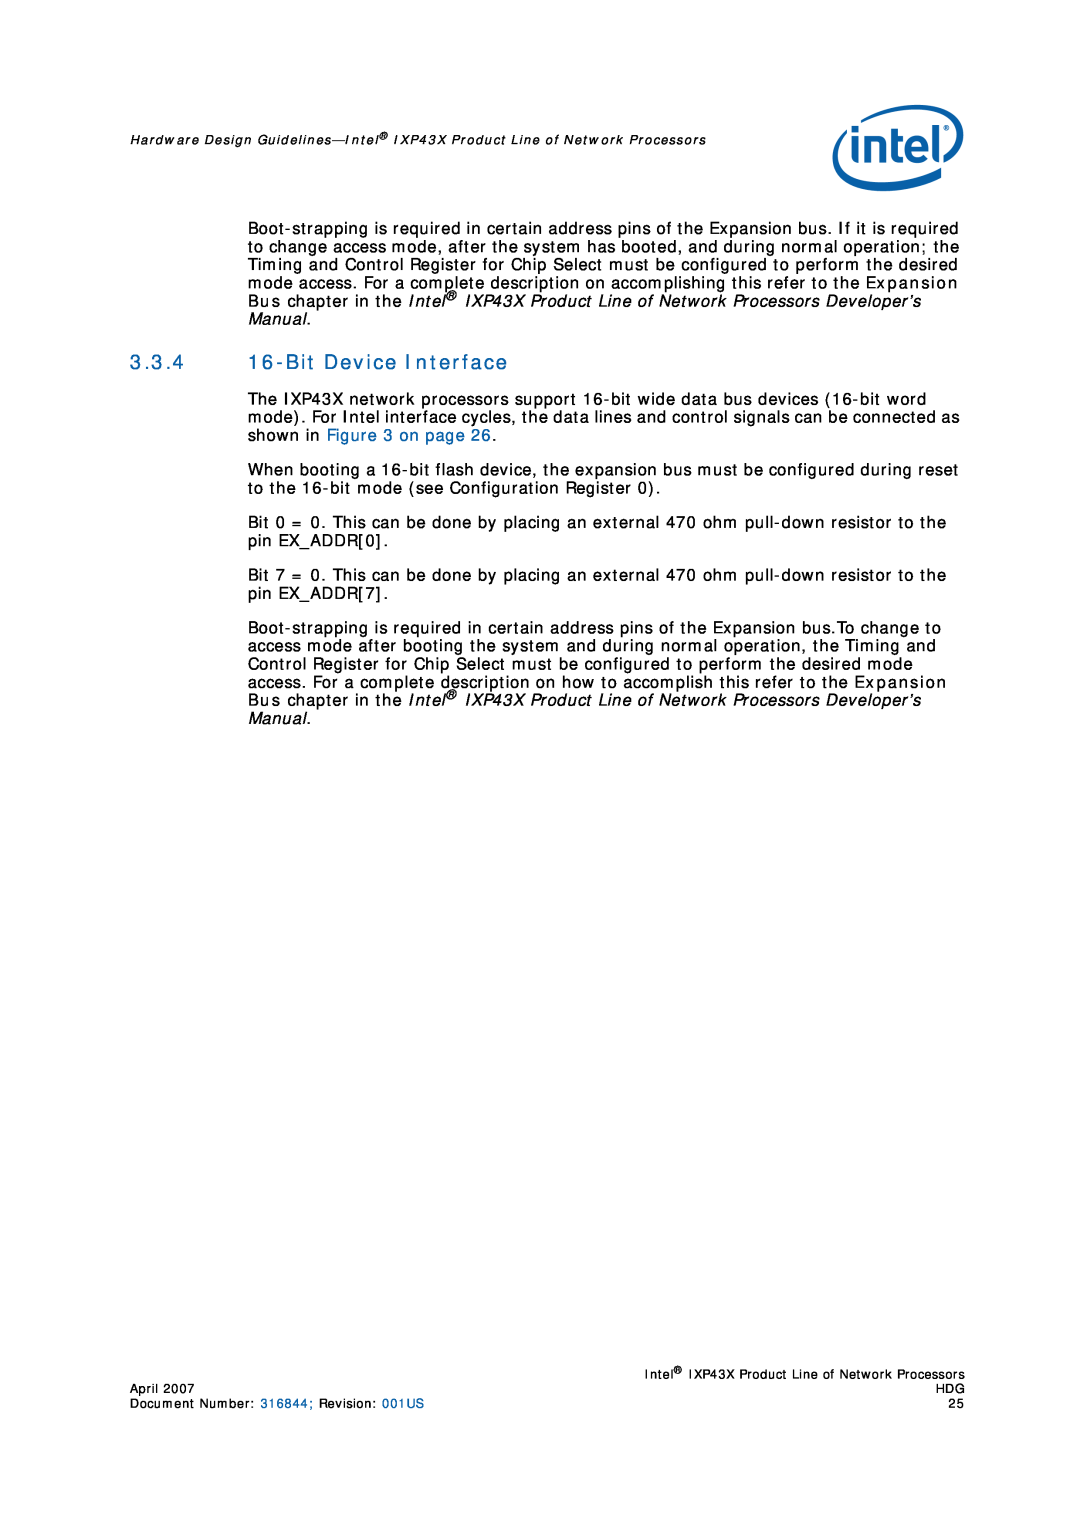 Intel IXP43X manual 3.3.4 16-Bit Device Interface, April, Document Number 316844 Revision 001US 